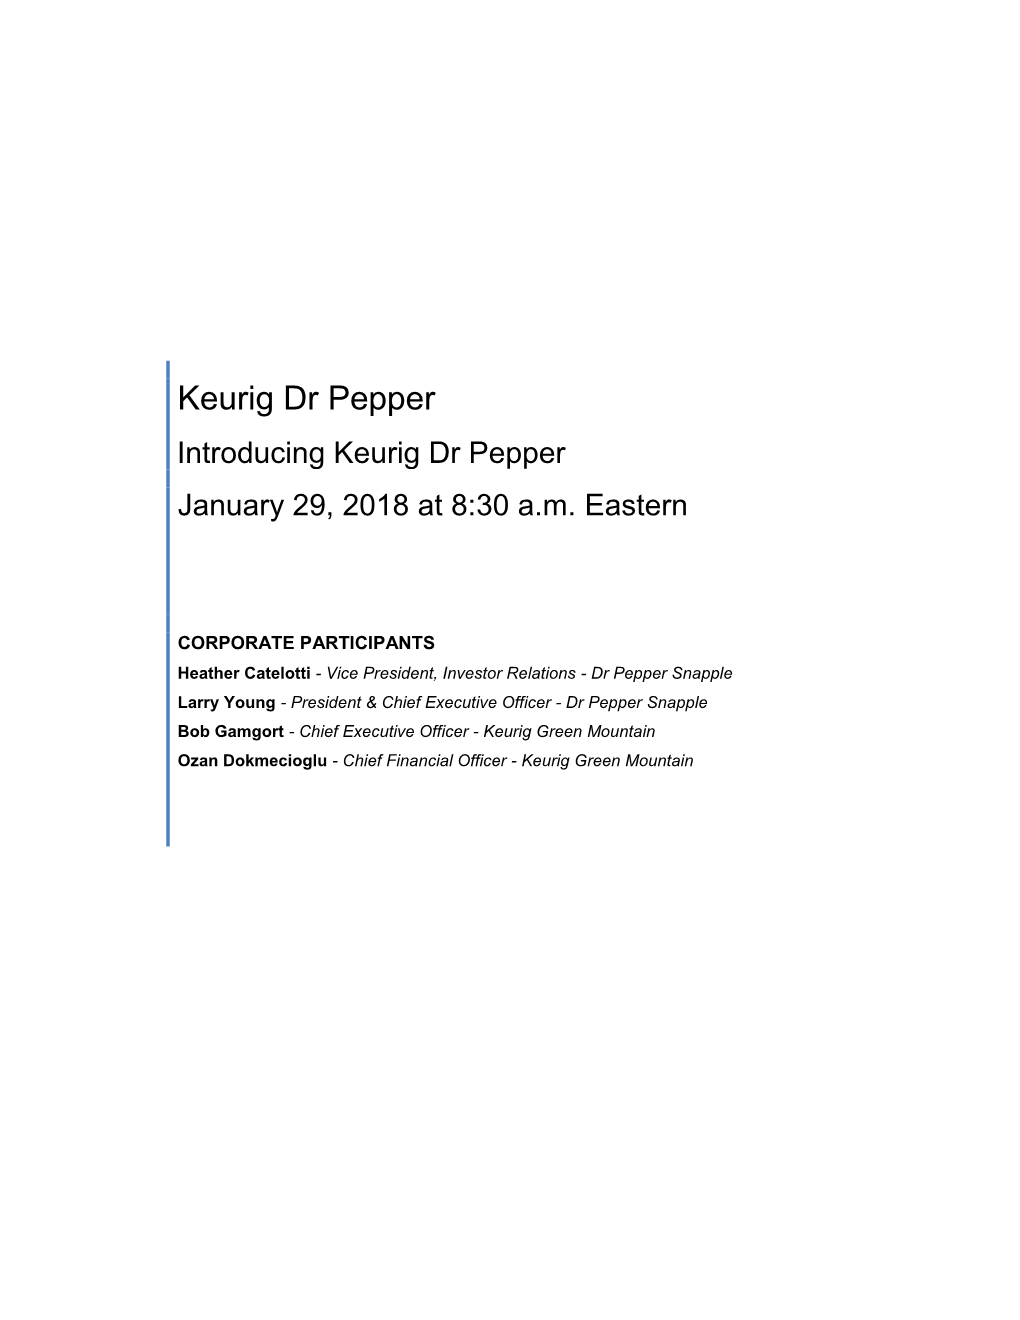 Keurig Dr Pepper Introducing Keurig Dr Pepper January 29, 2018 at 8:30 A.M